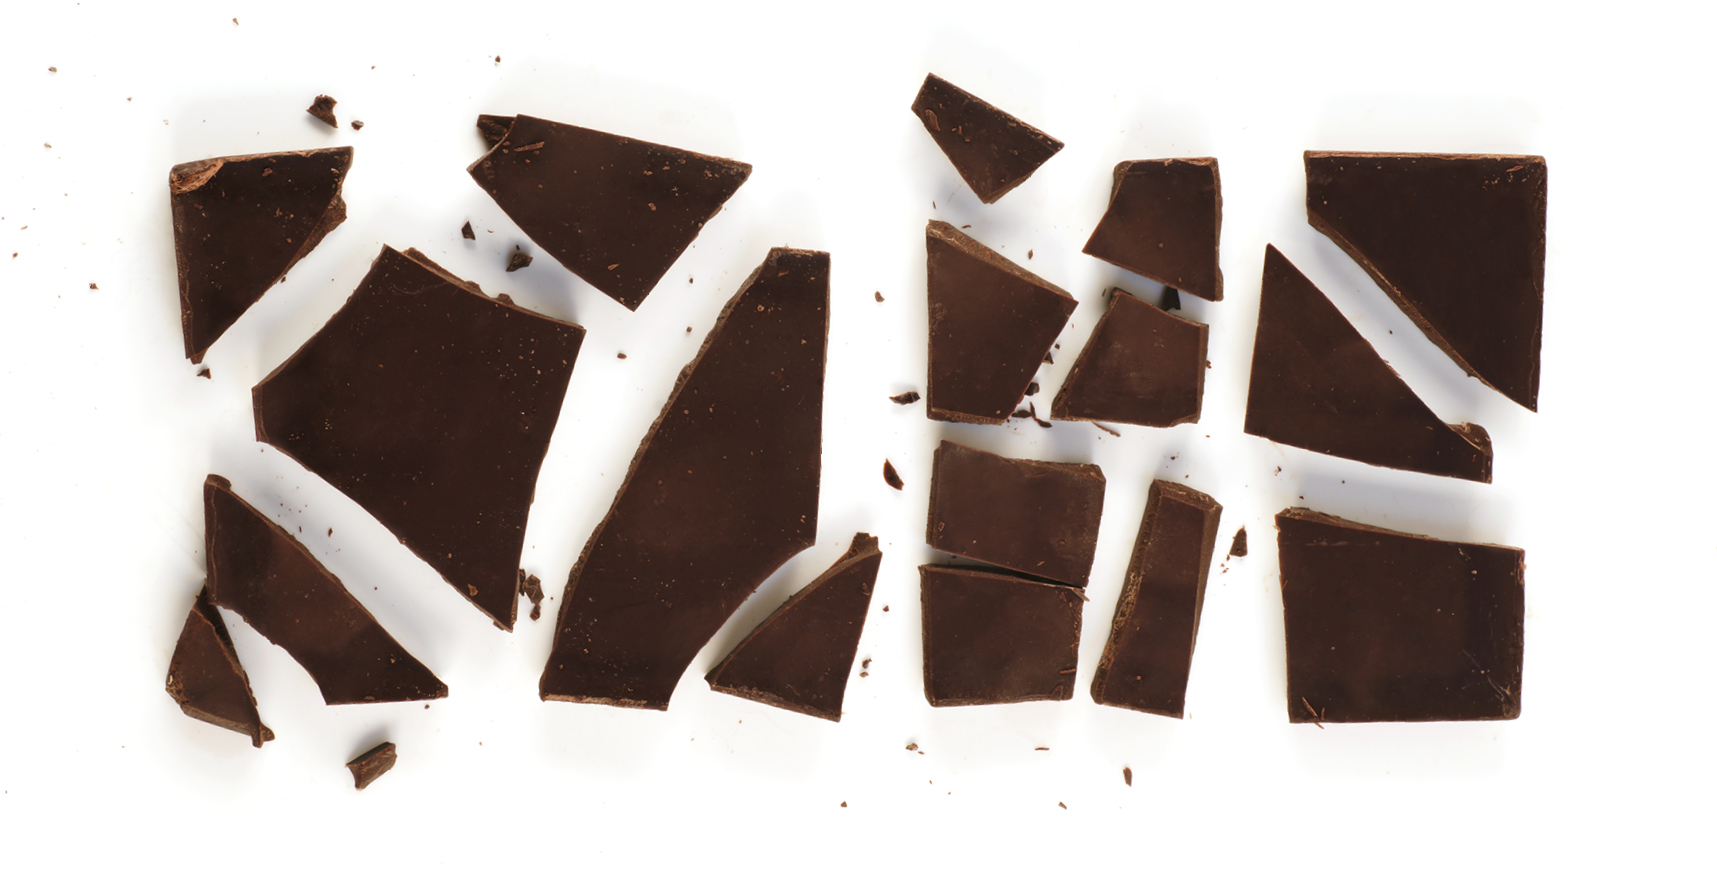 Chocolate bar broken up into pieces.